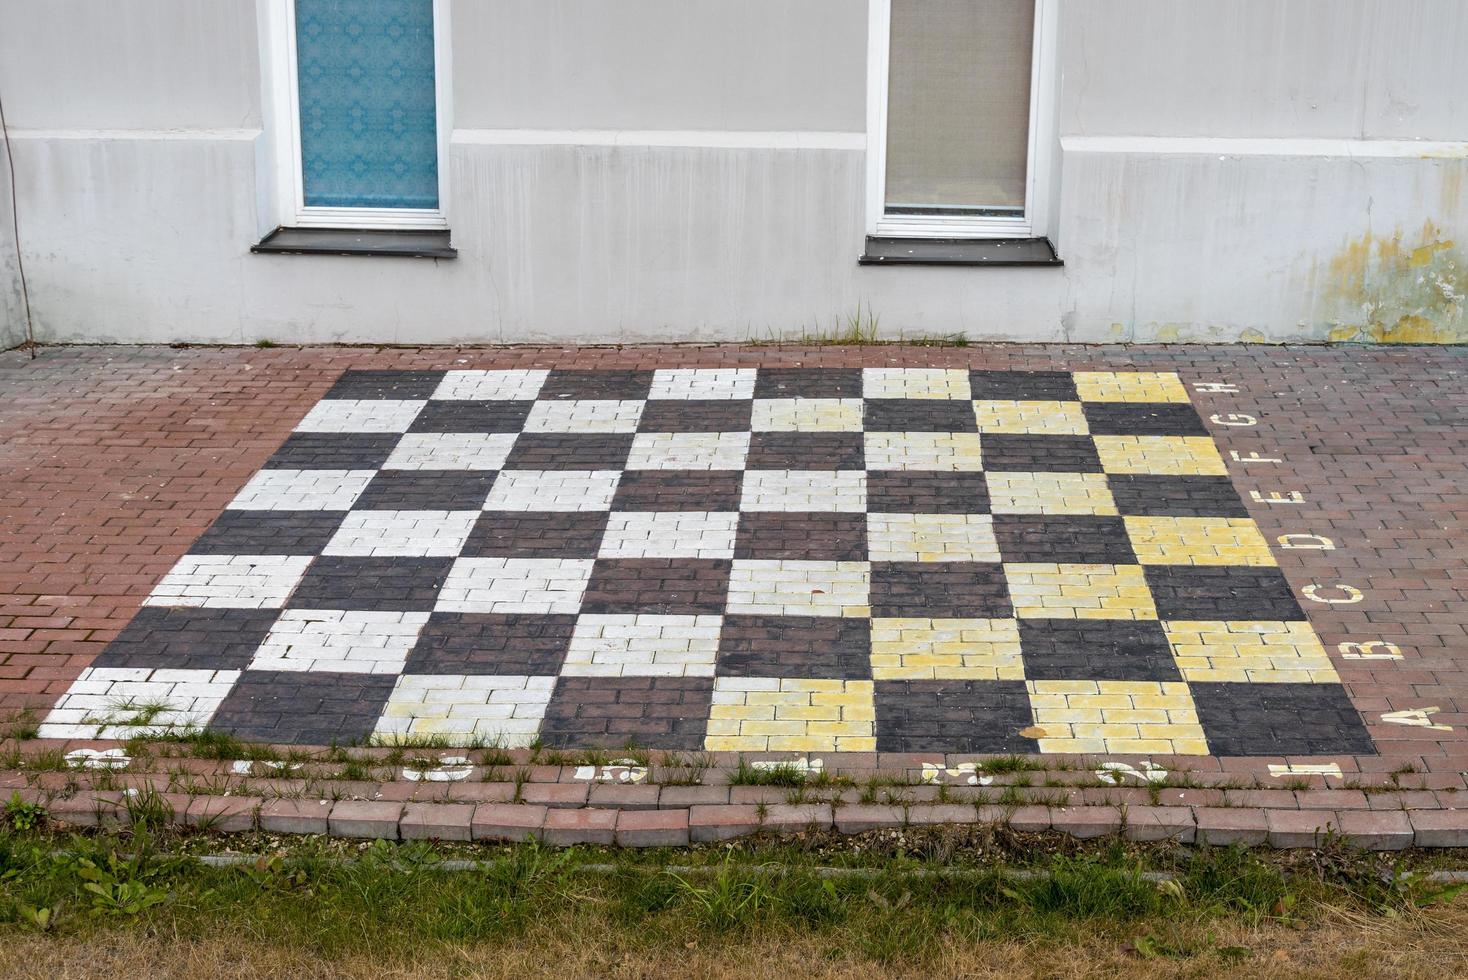 um campo de xadrez na estrada para jogar xadrez. 18902162 Foto de